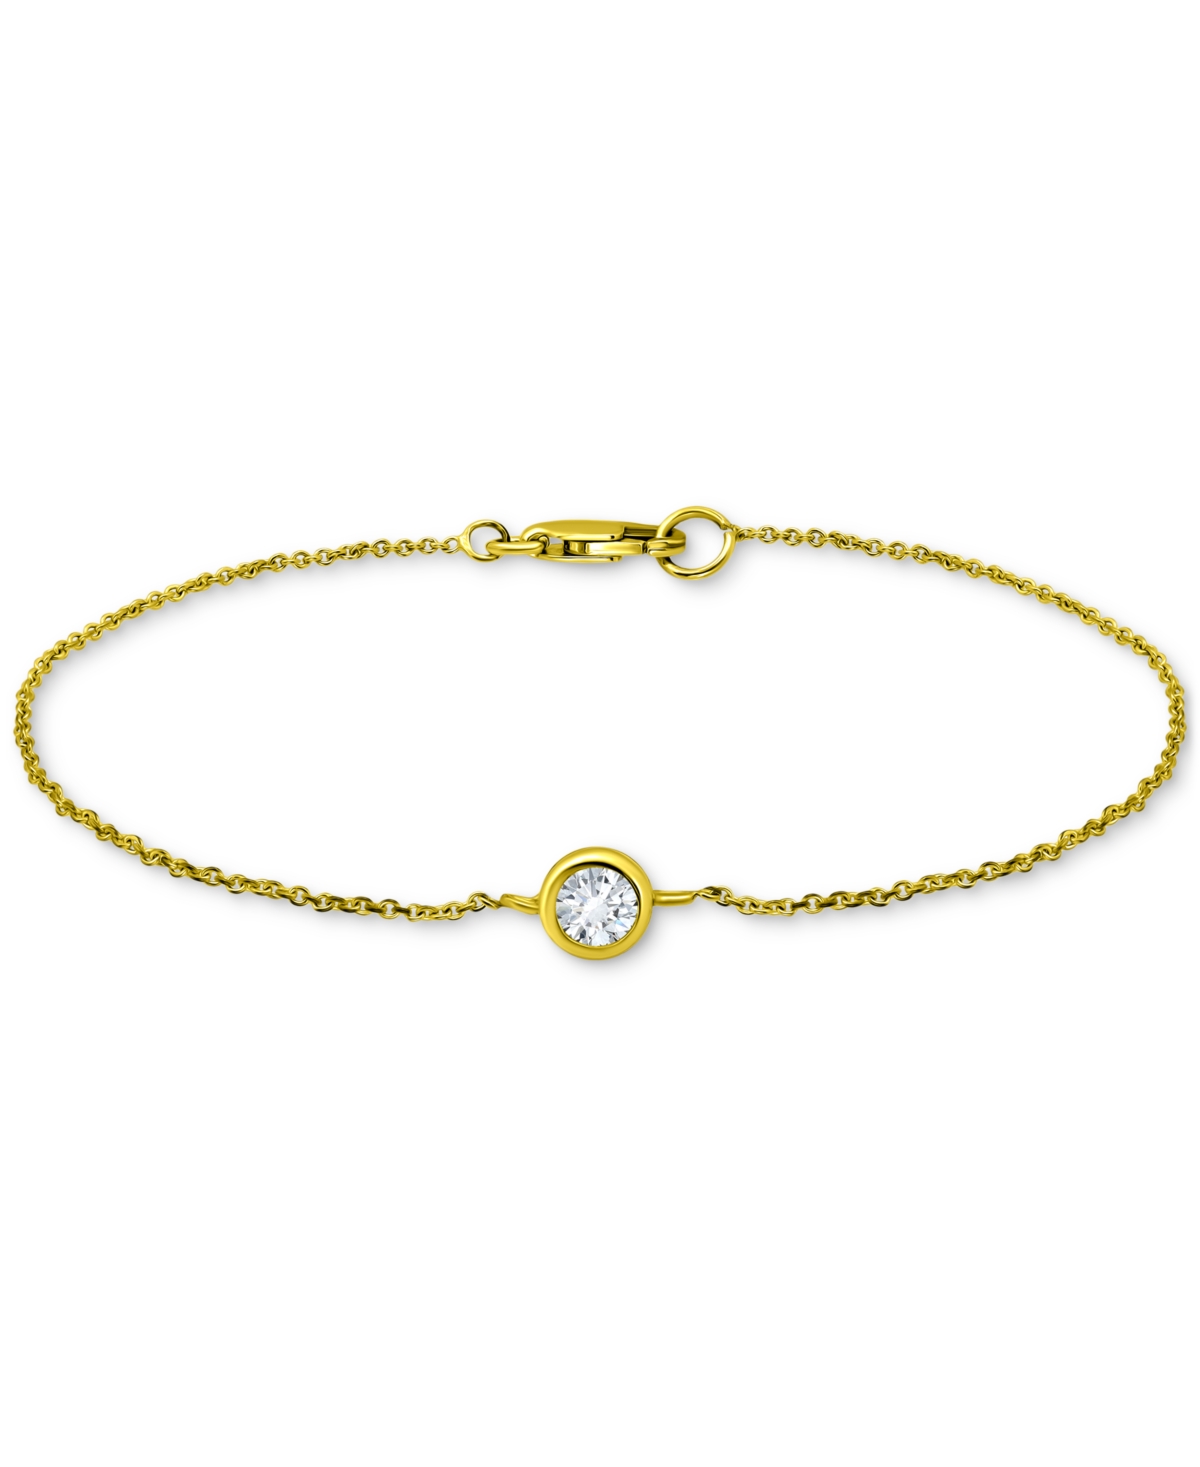 Giani Bernini Cubic Zirconia Bezel Link Bracelet In 18k Gold-plated Sterling Silver, Created For Macy's